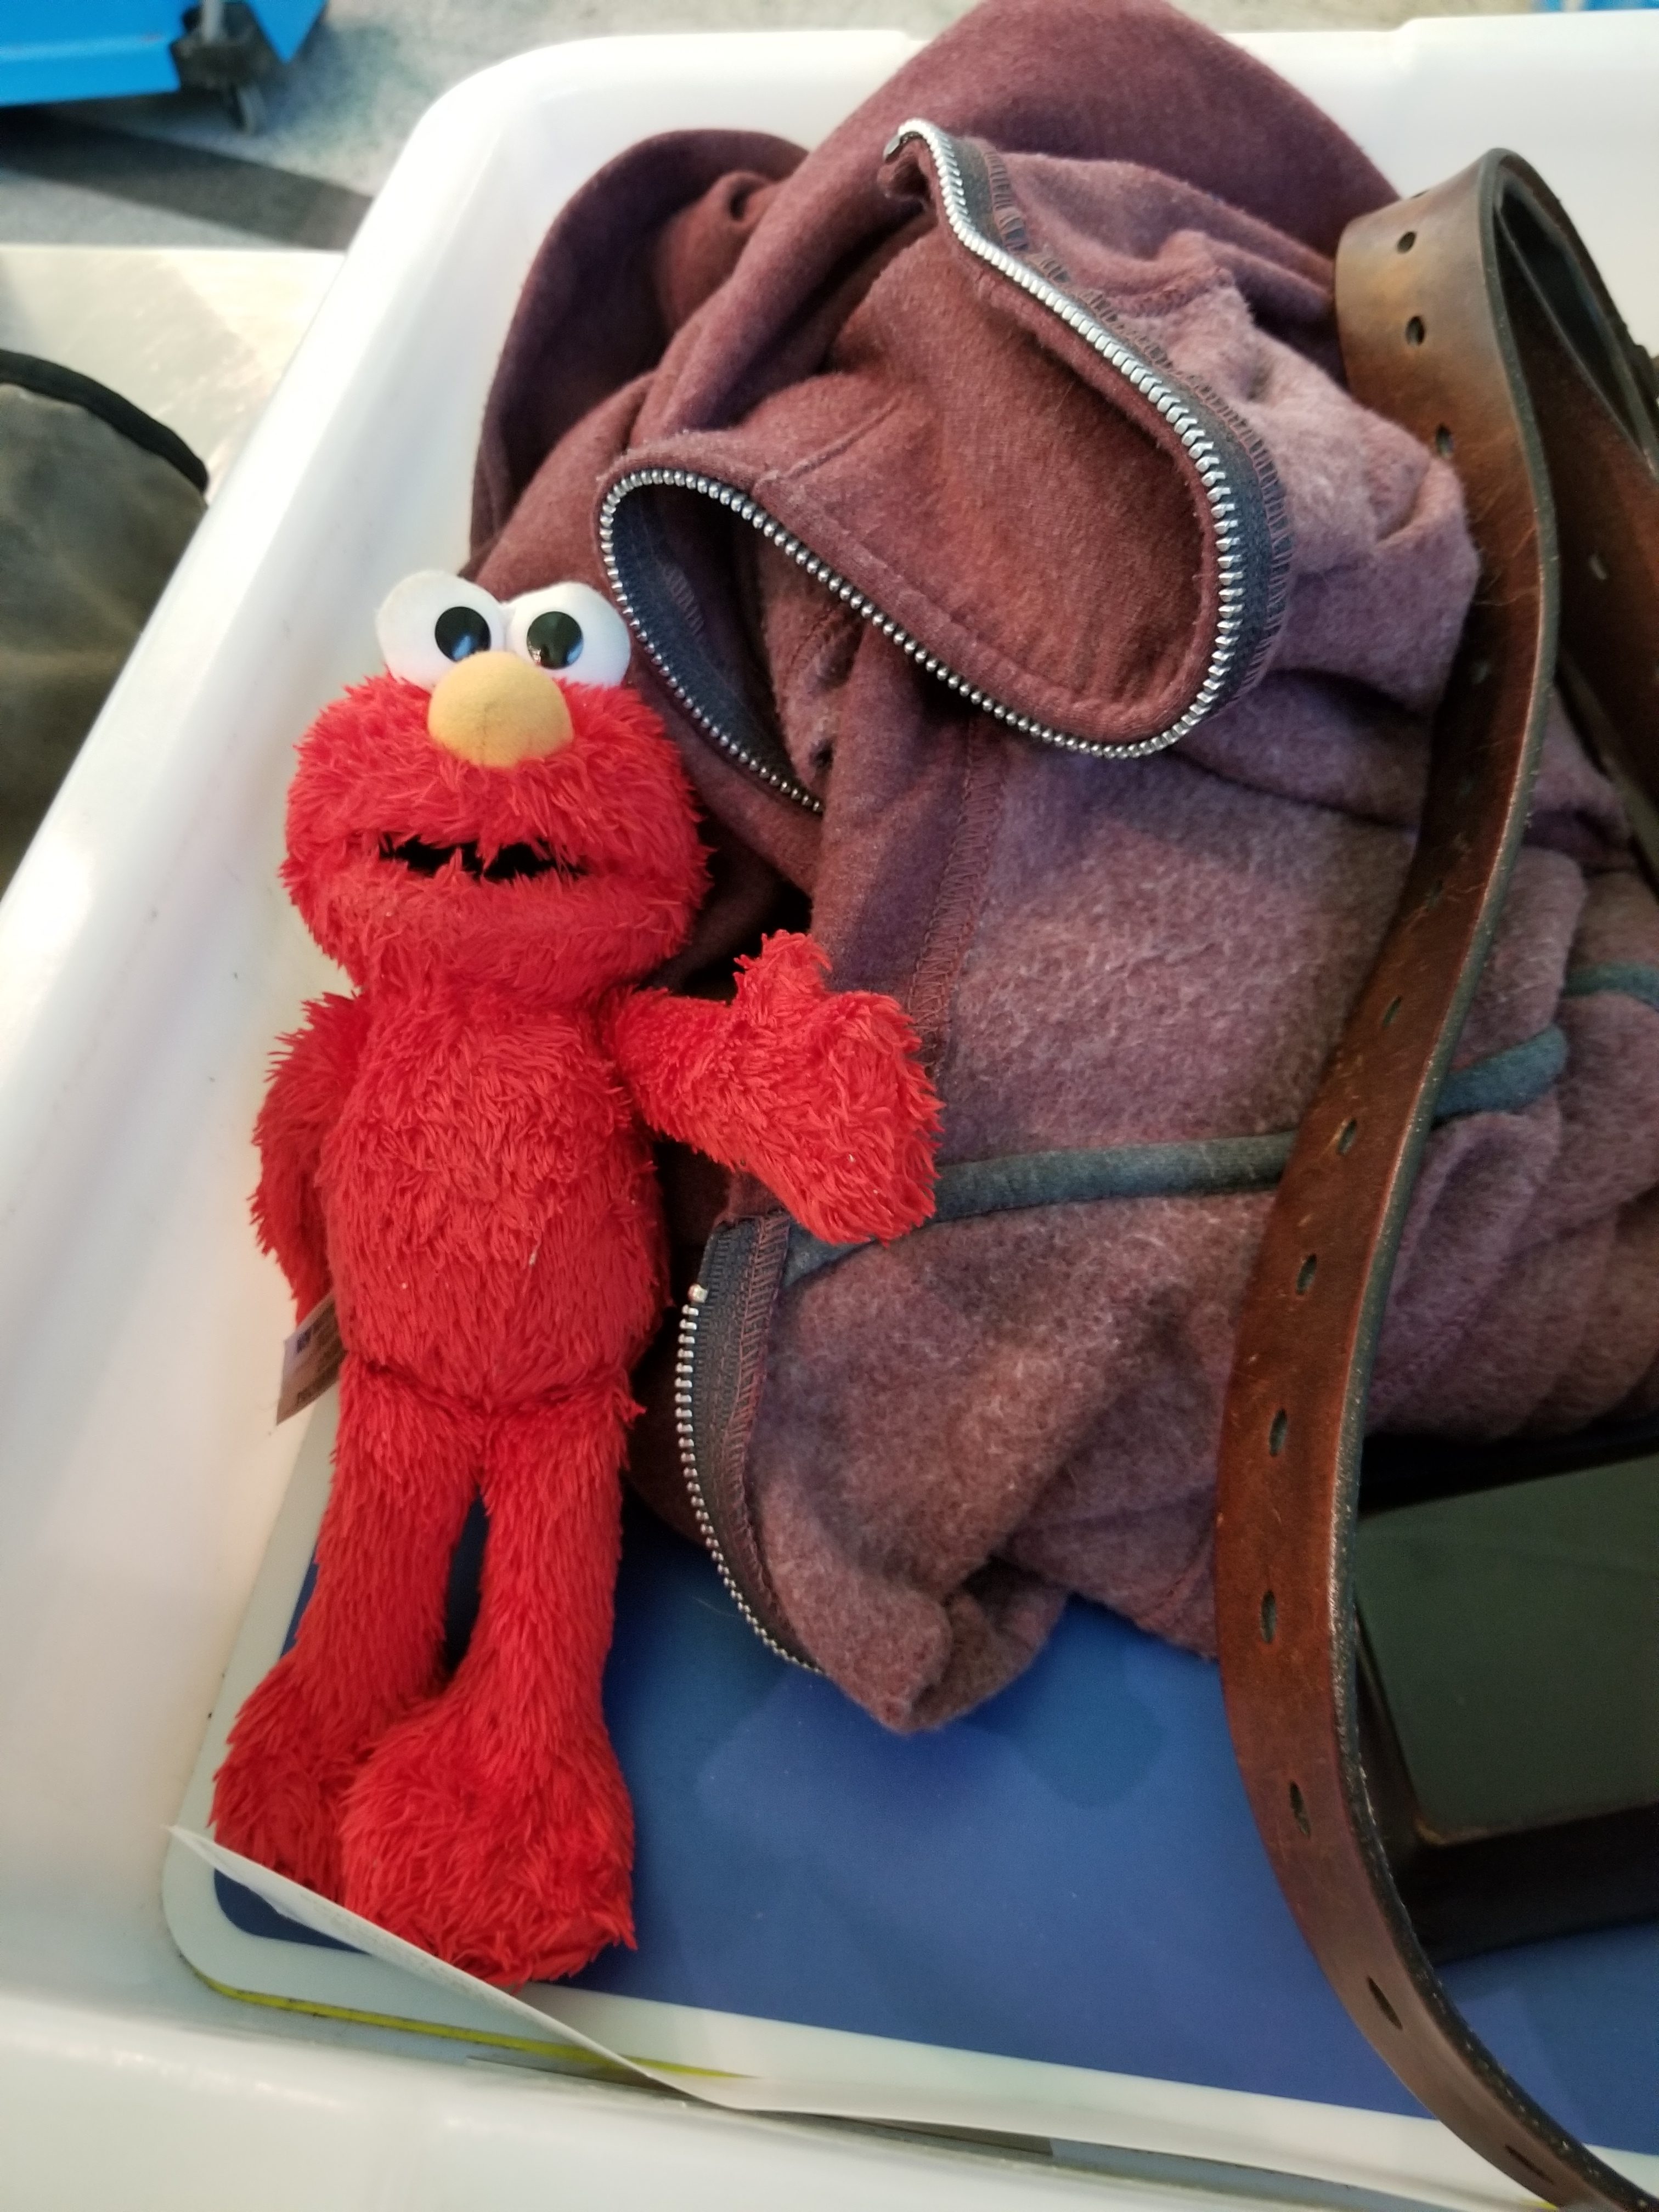 Elmo goes through the TSA check